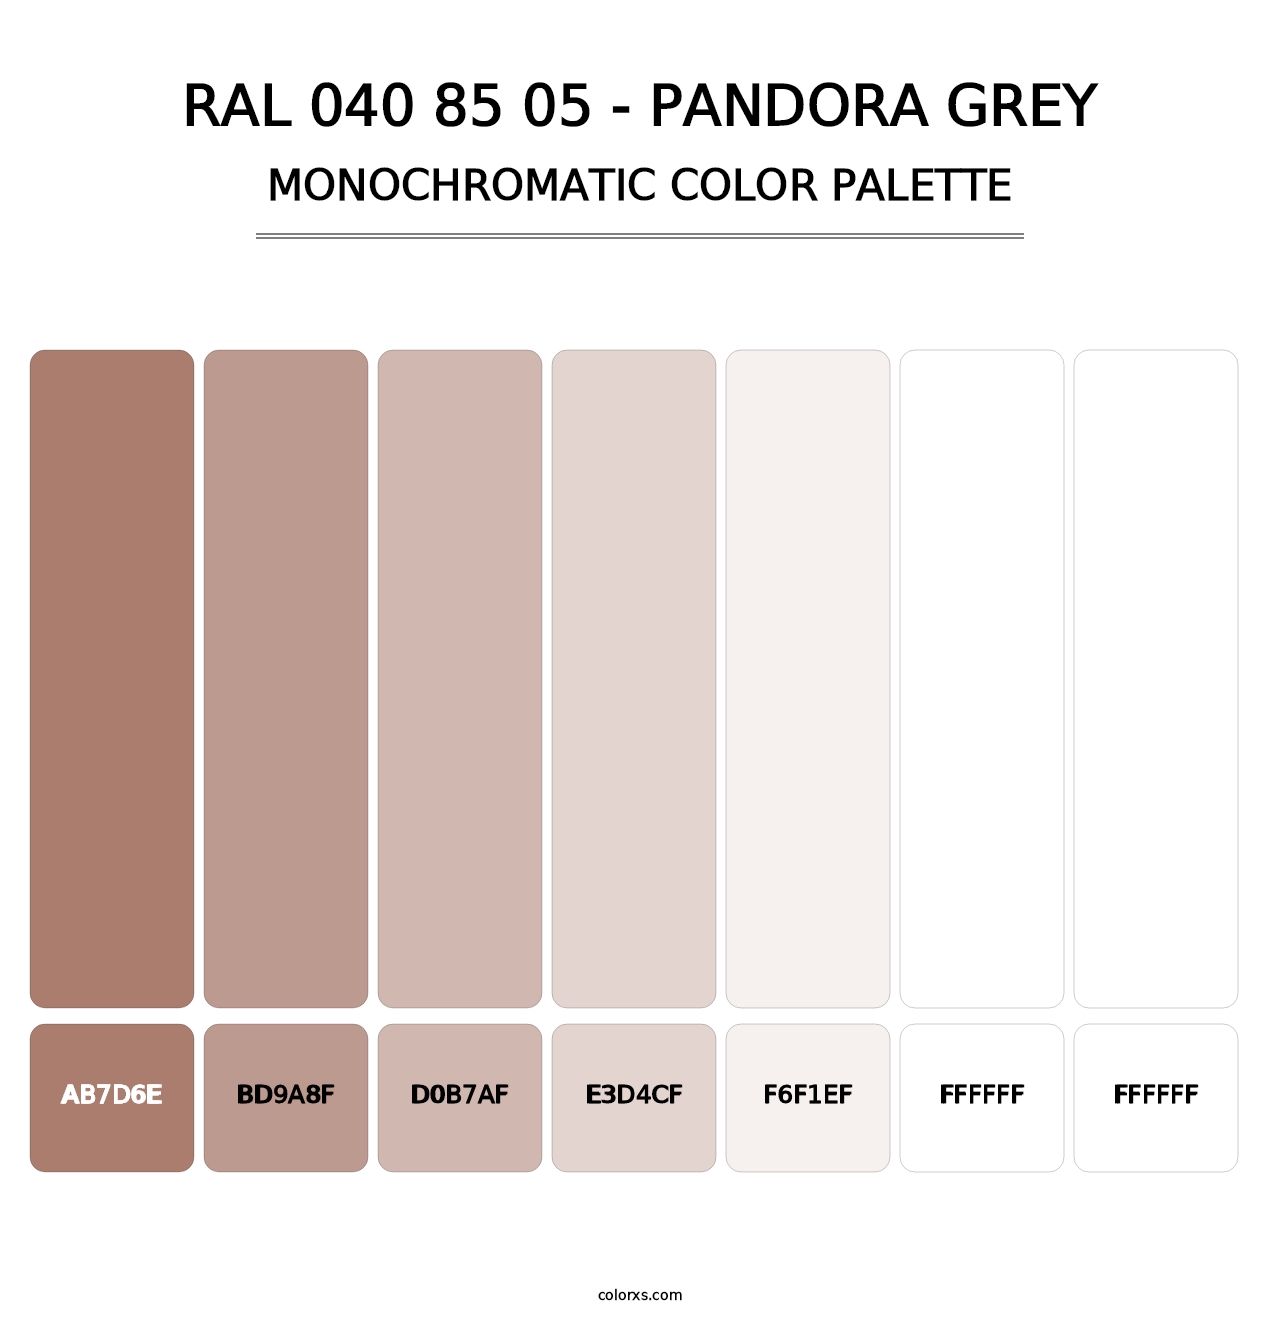 RAL 040 85 05 - Pandora Grey - Monochromatic Color Palette